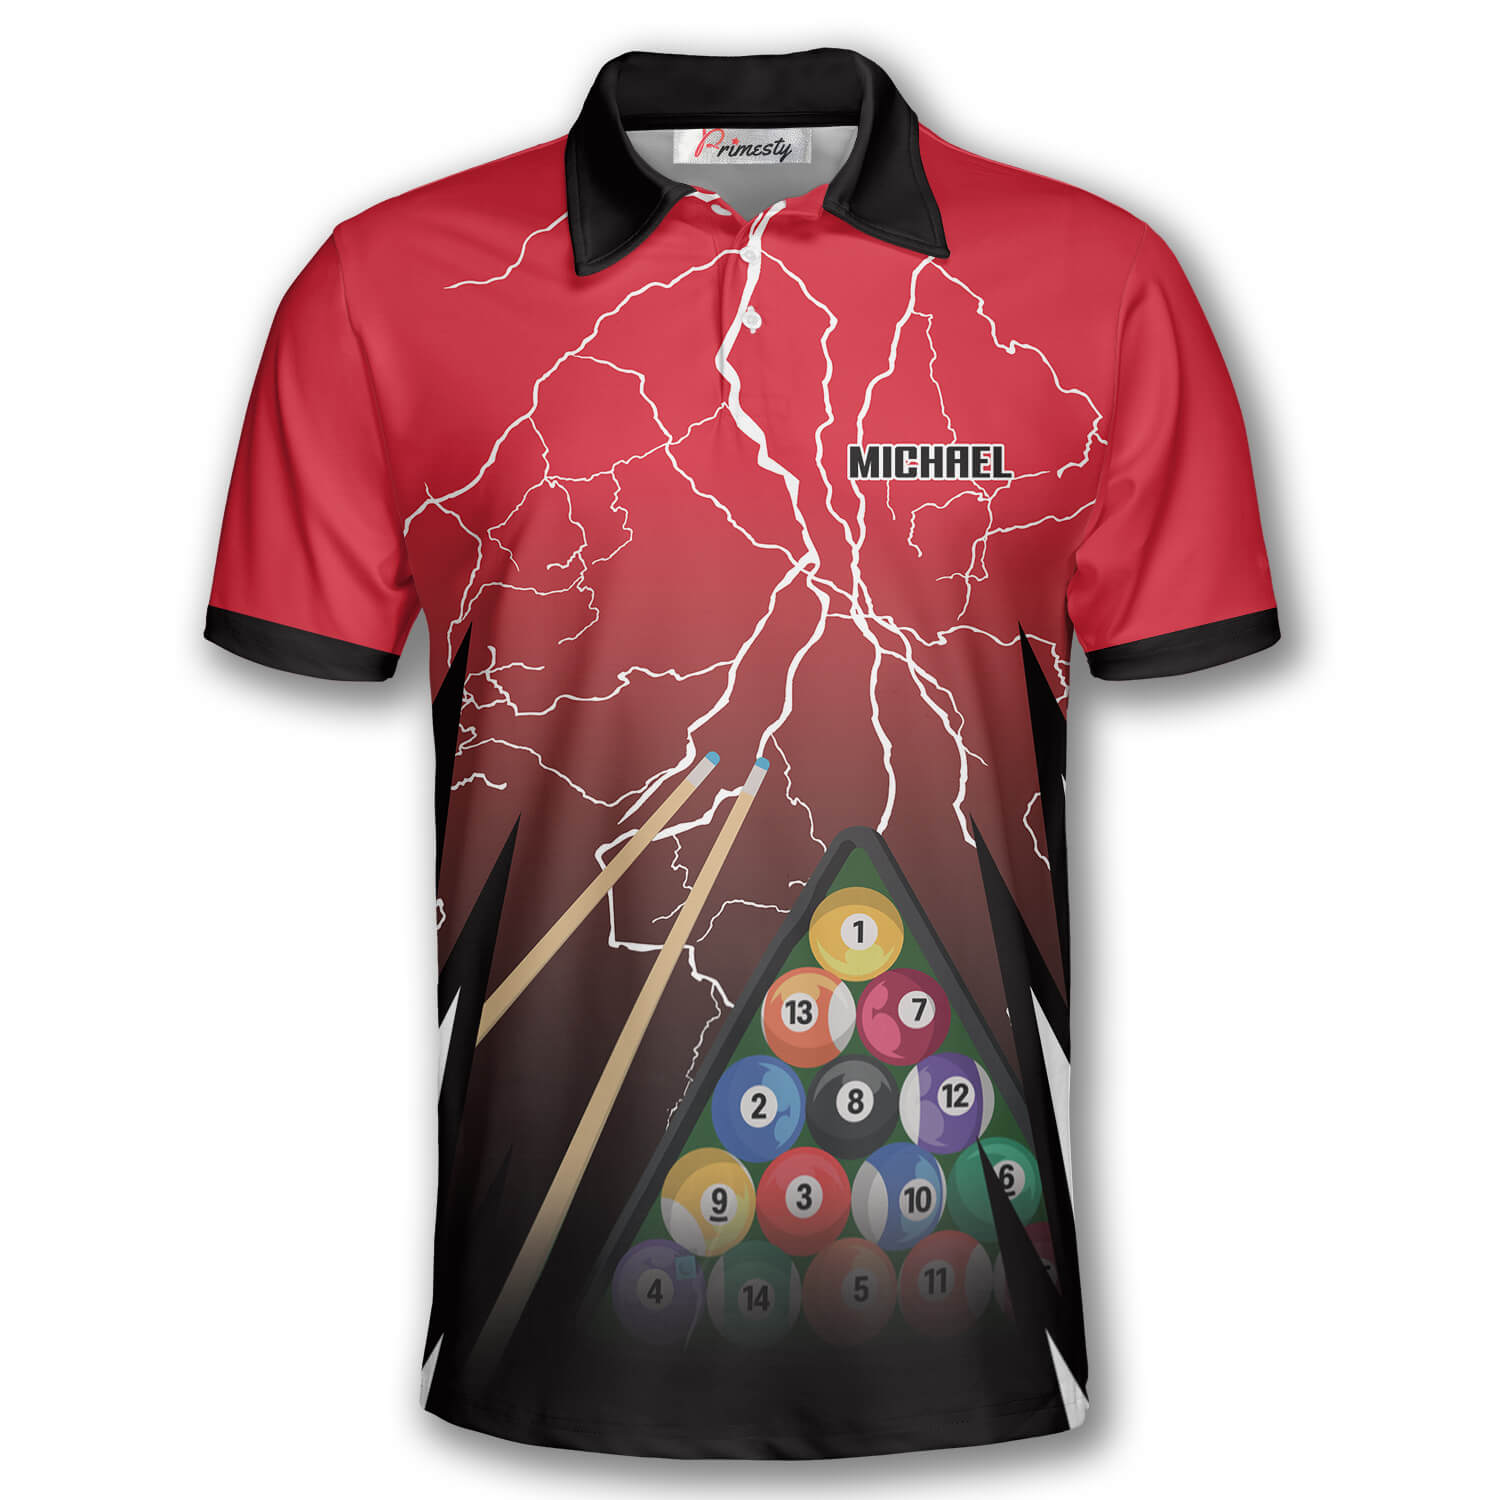 Thunder Lightning Red Version Custom Billiard Shirts for Men/ Men